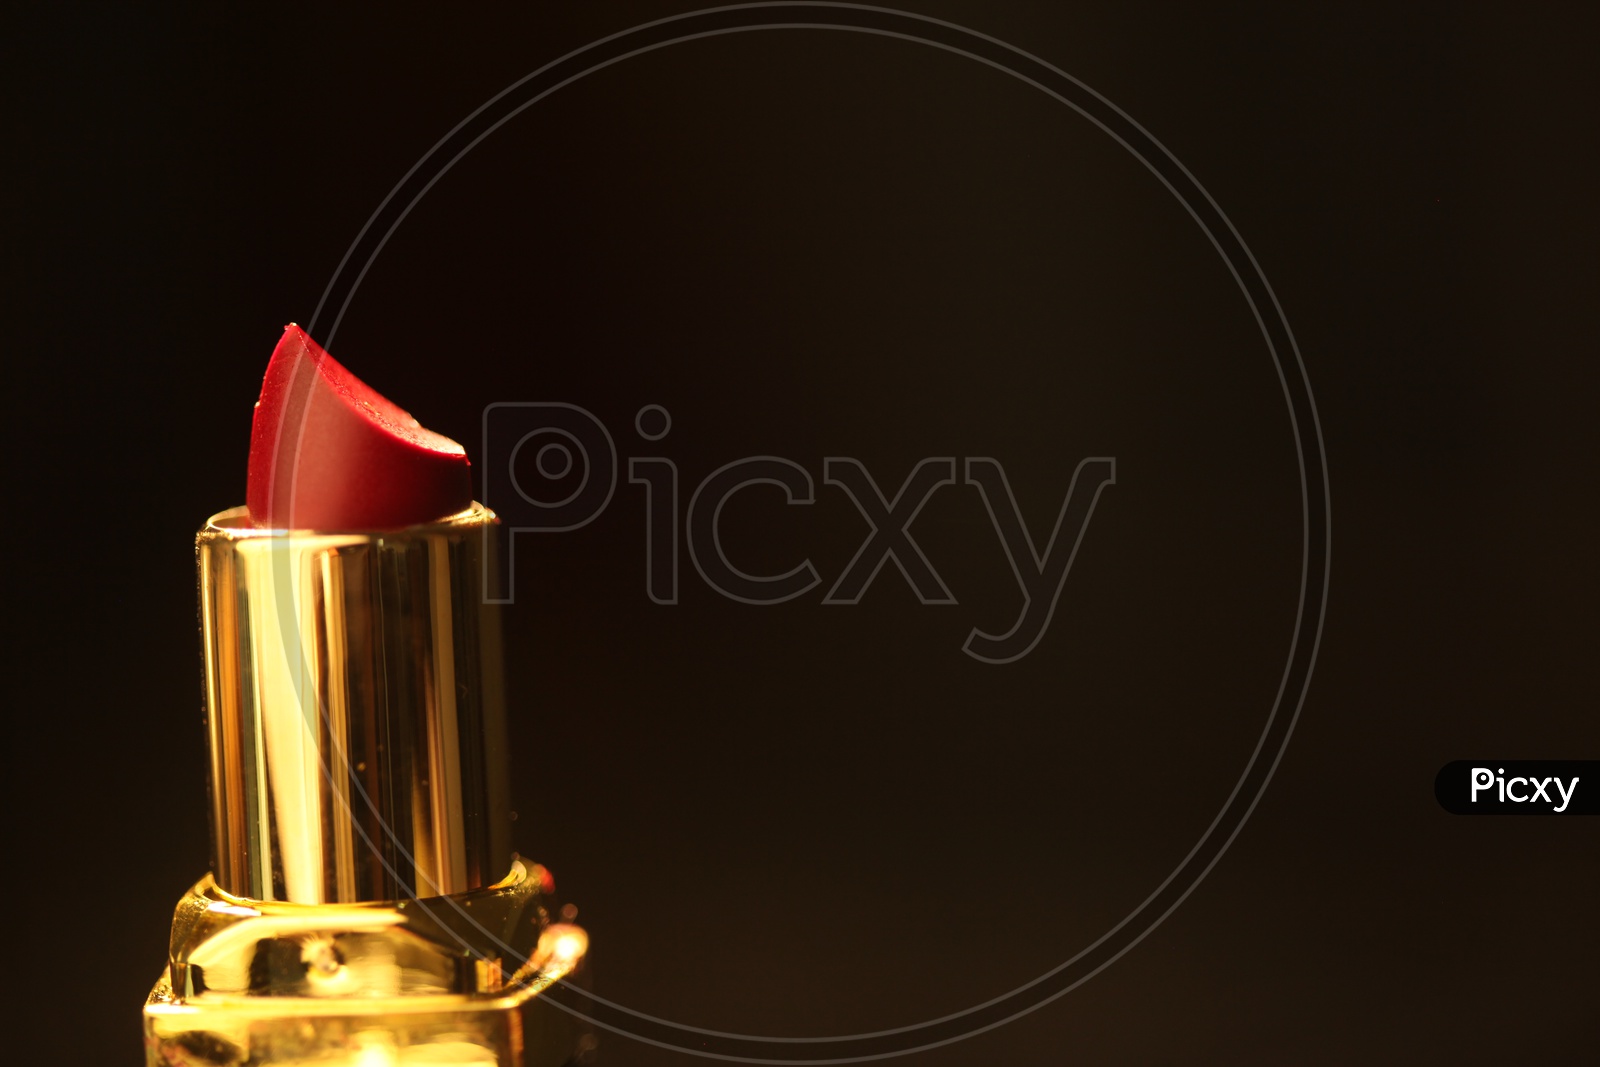 Lipstick Closeup Shot Presentation